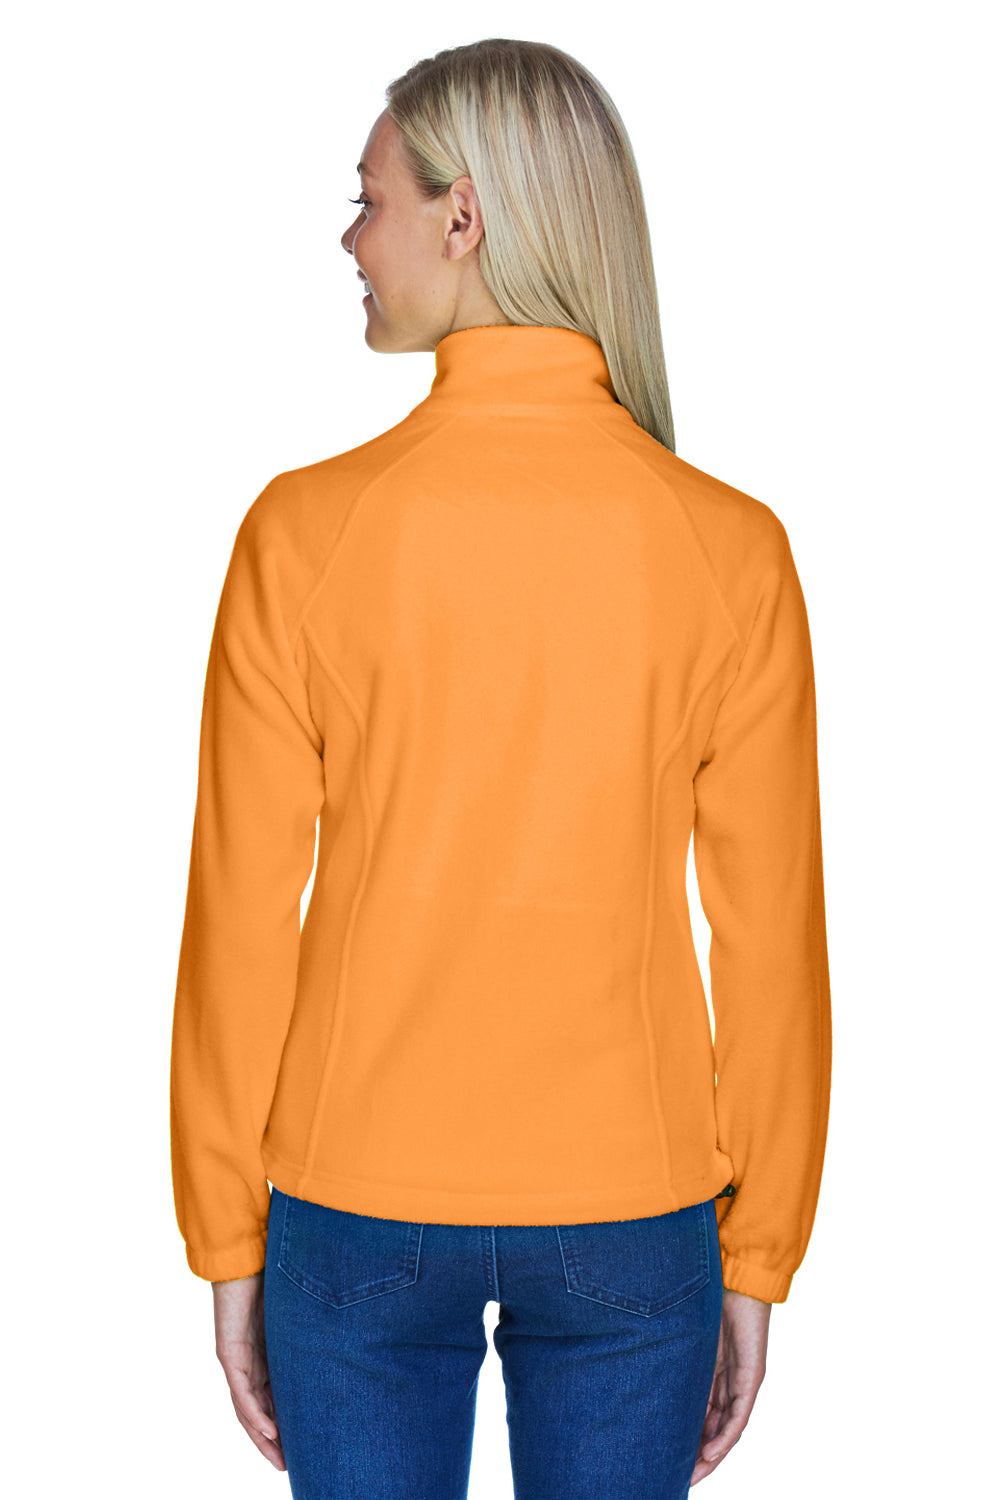 Harriton M990W Womens Full Zip Fleece Jacket Safety Orange Back